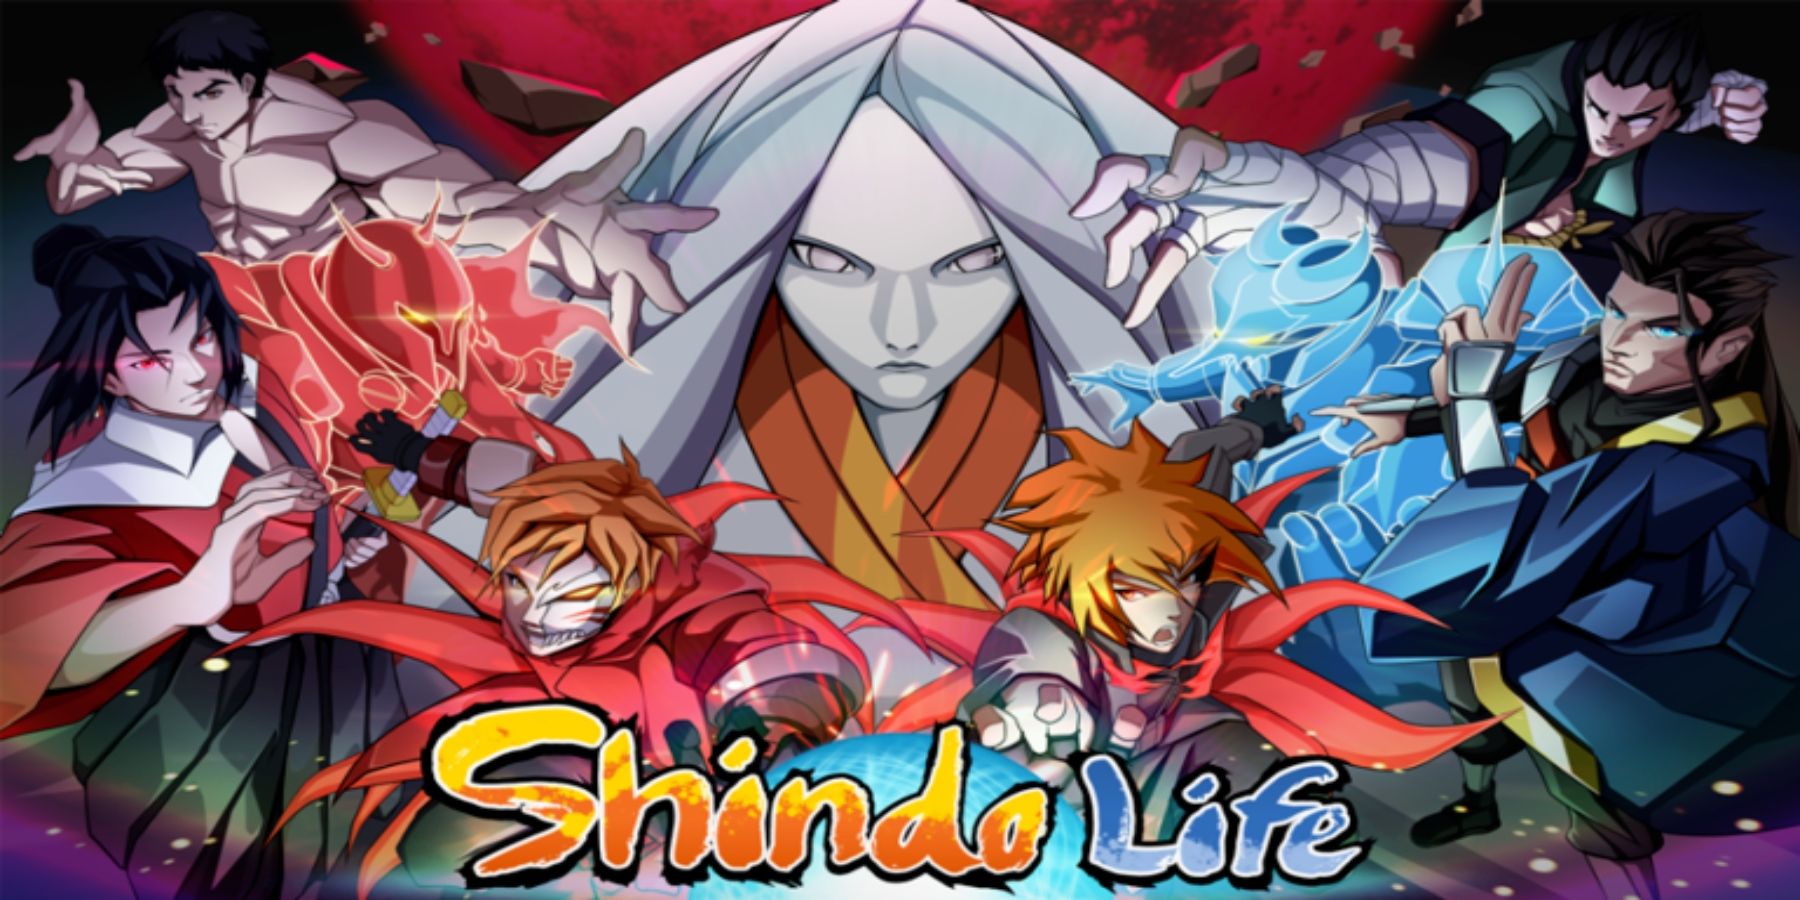 Shindo Life Element Tier List